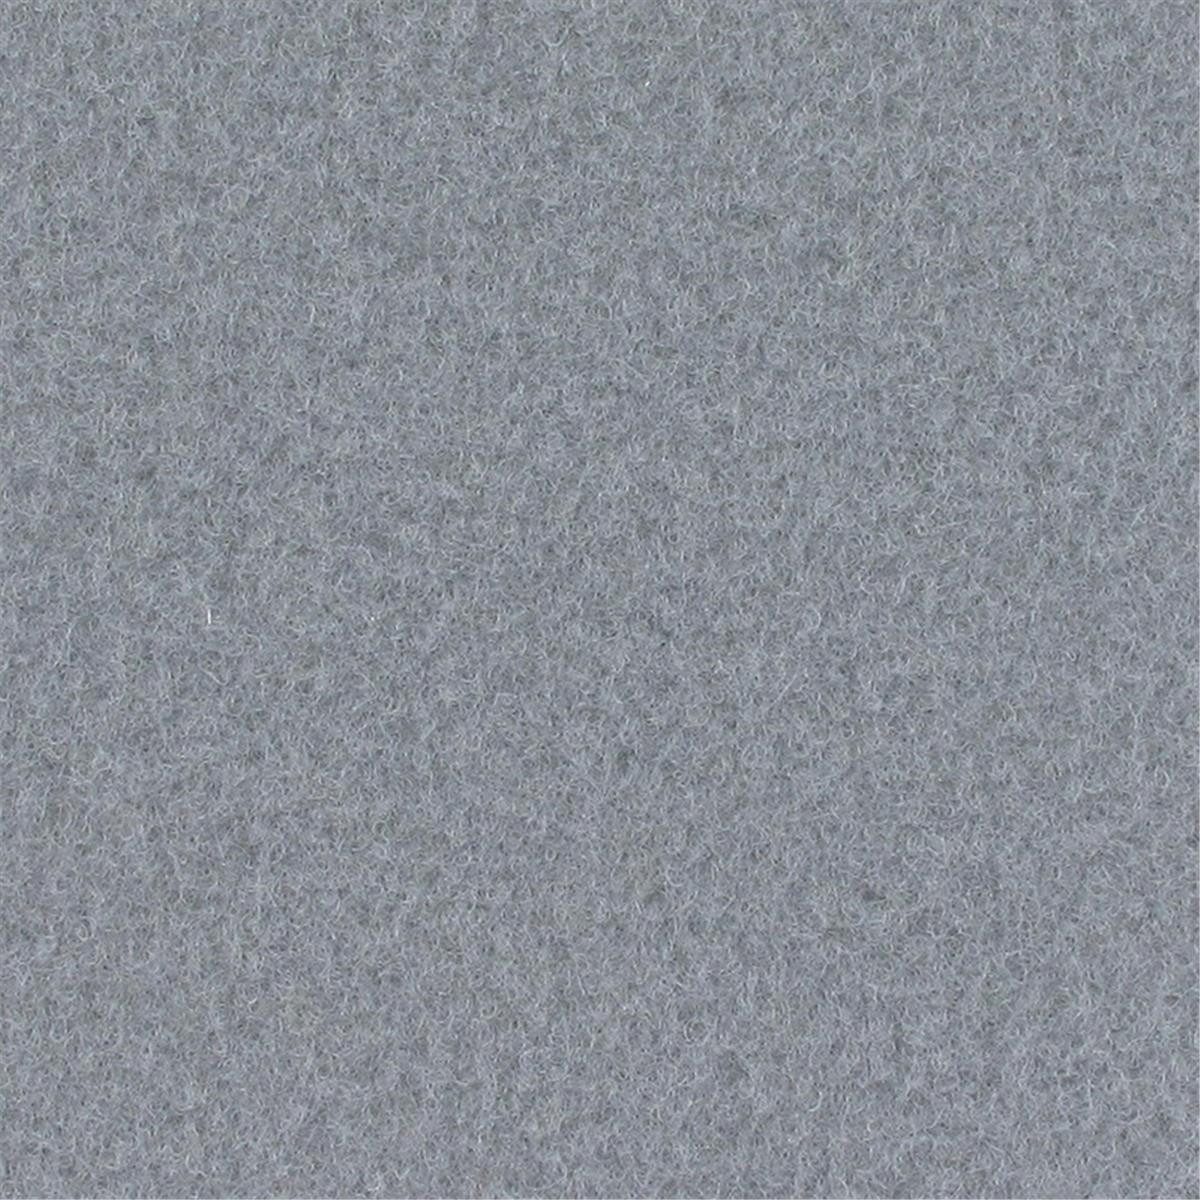 Nadelvliesteppich Messeboden Velours EXPOLUXE Light Grey 9505, Rolle 60 qm